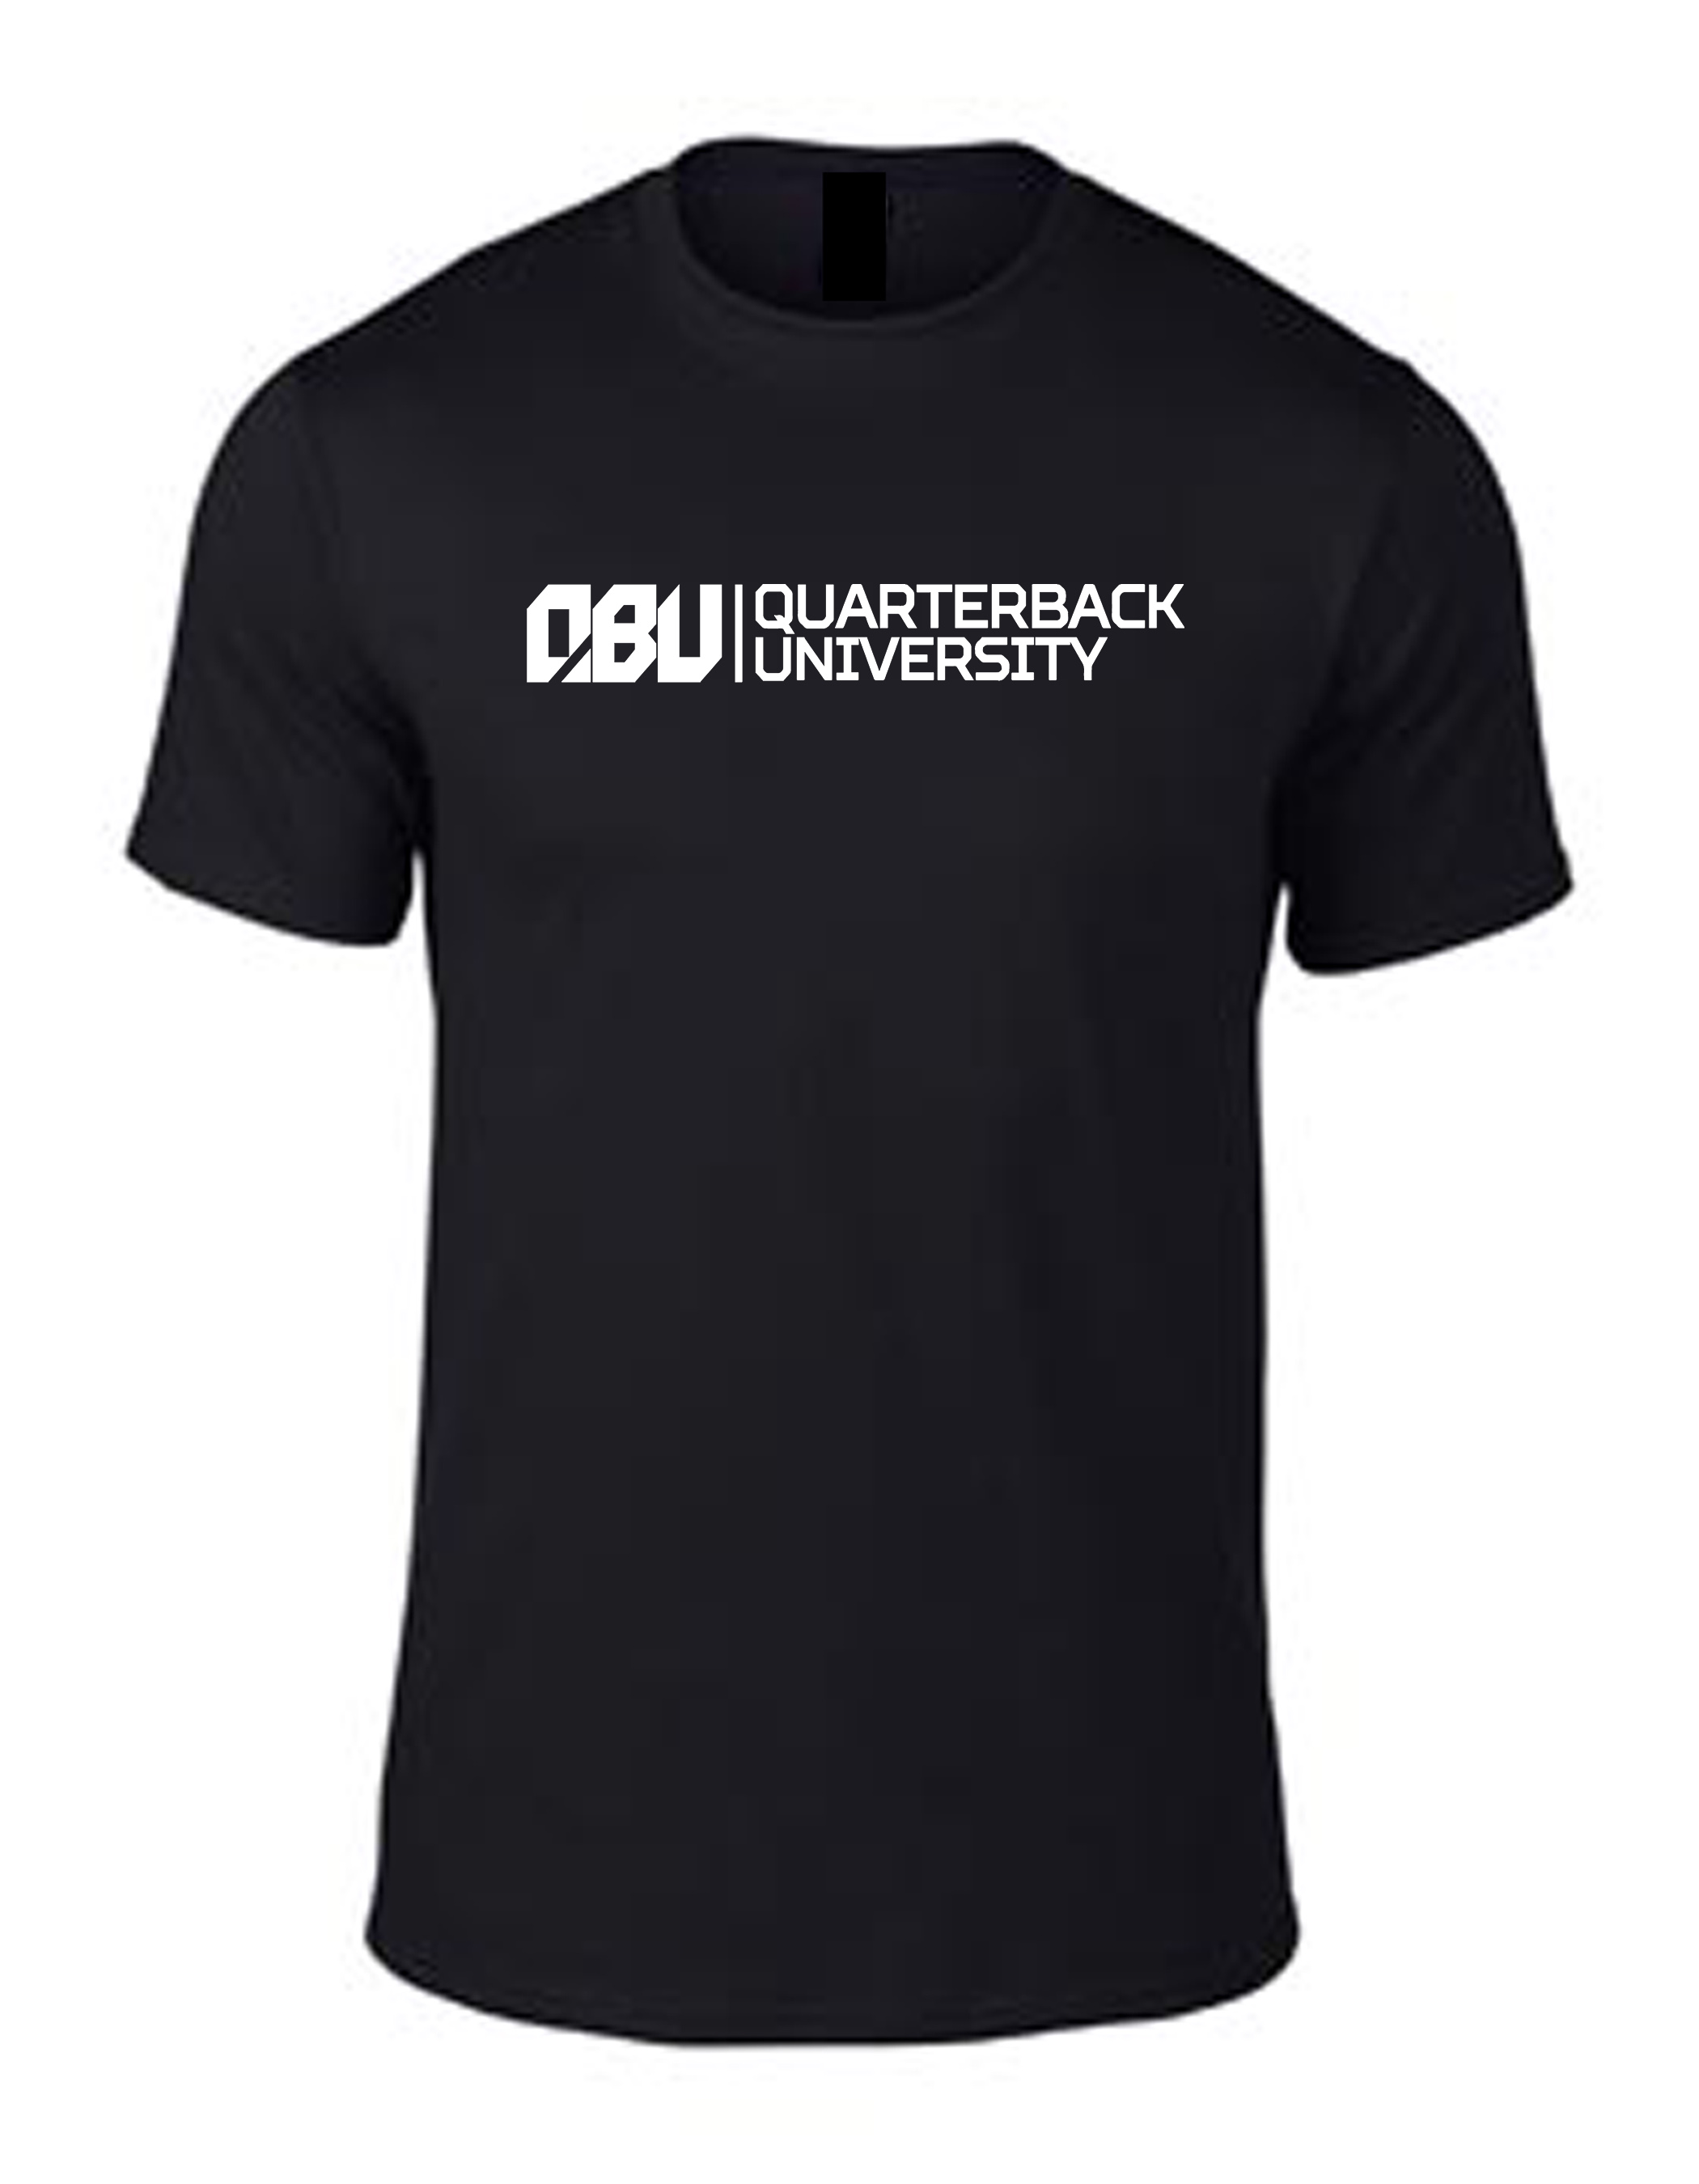 Quarterback University Tee Black